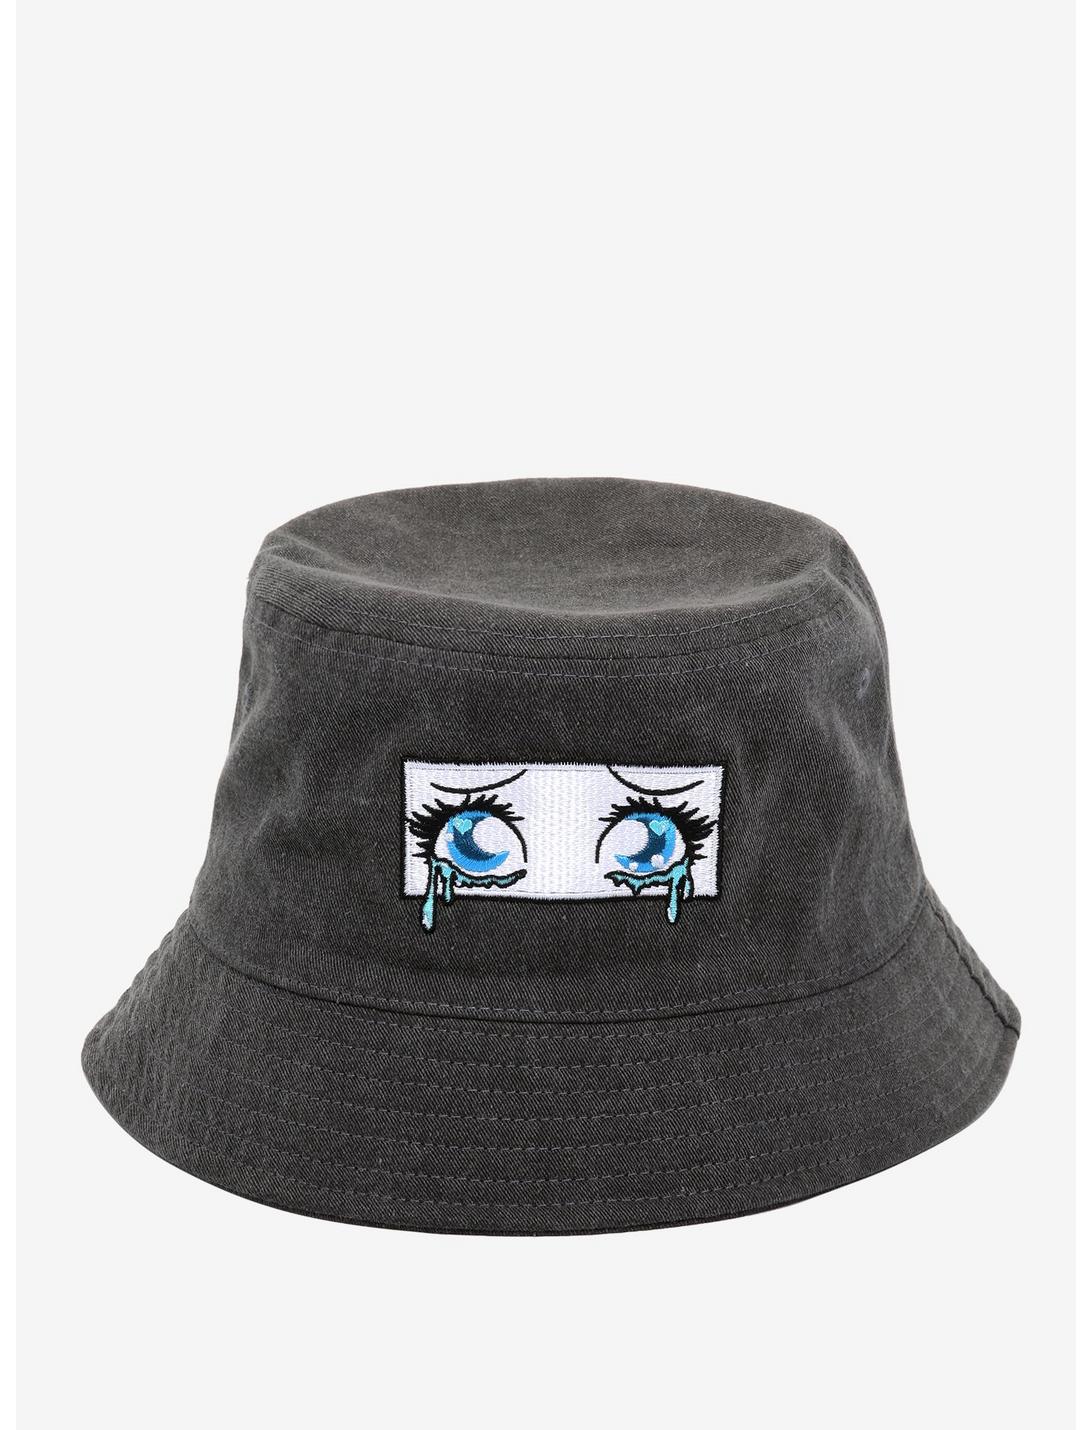 Crying Anime Eyes Bucket Hat, , hi-res